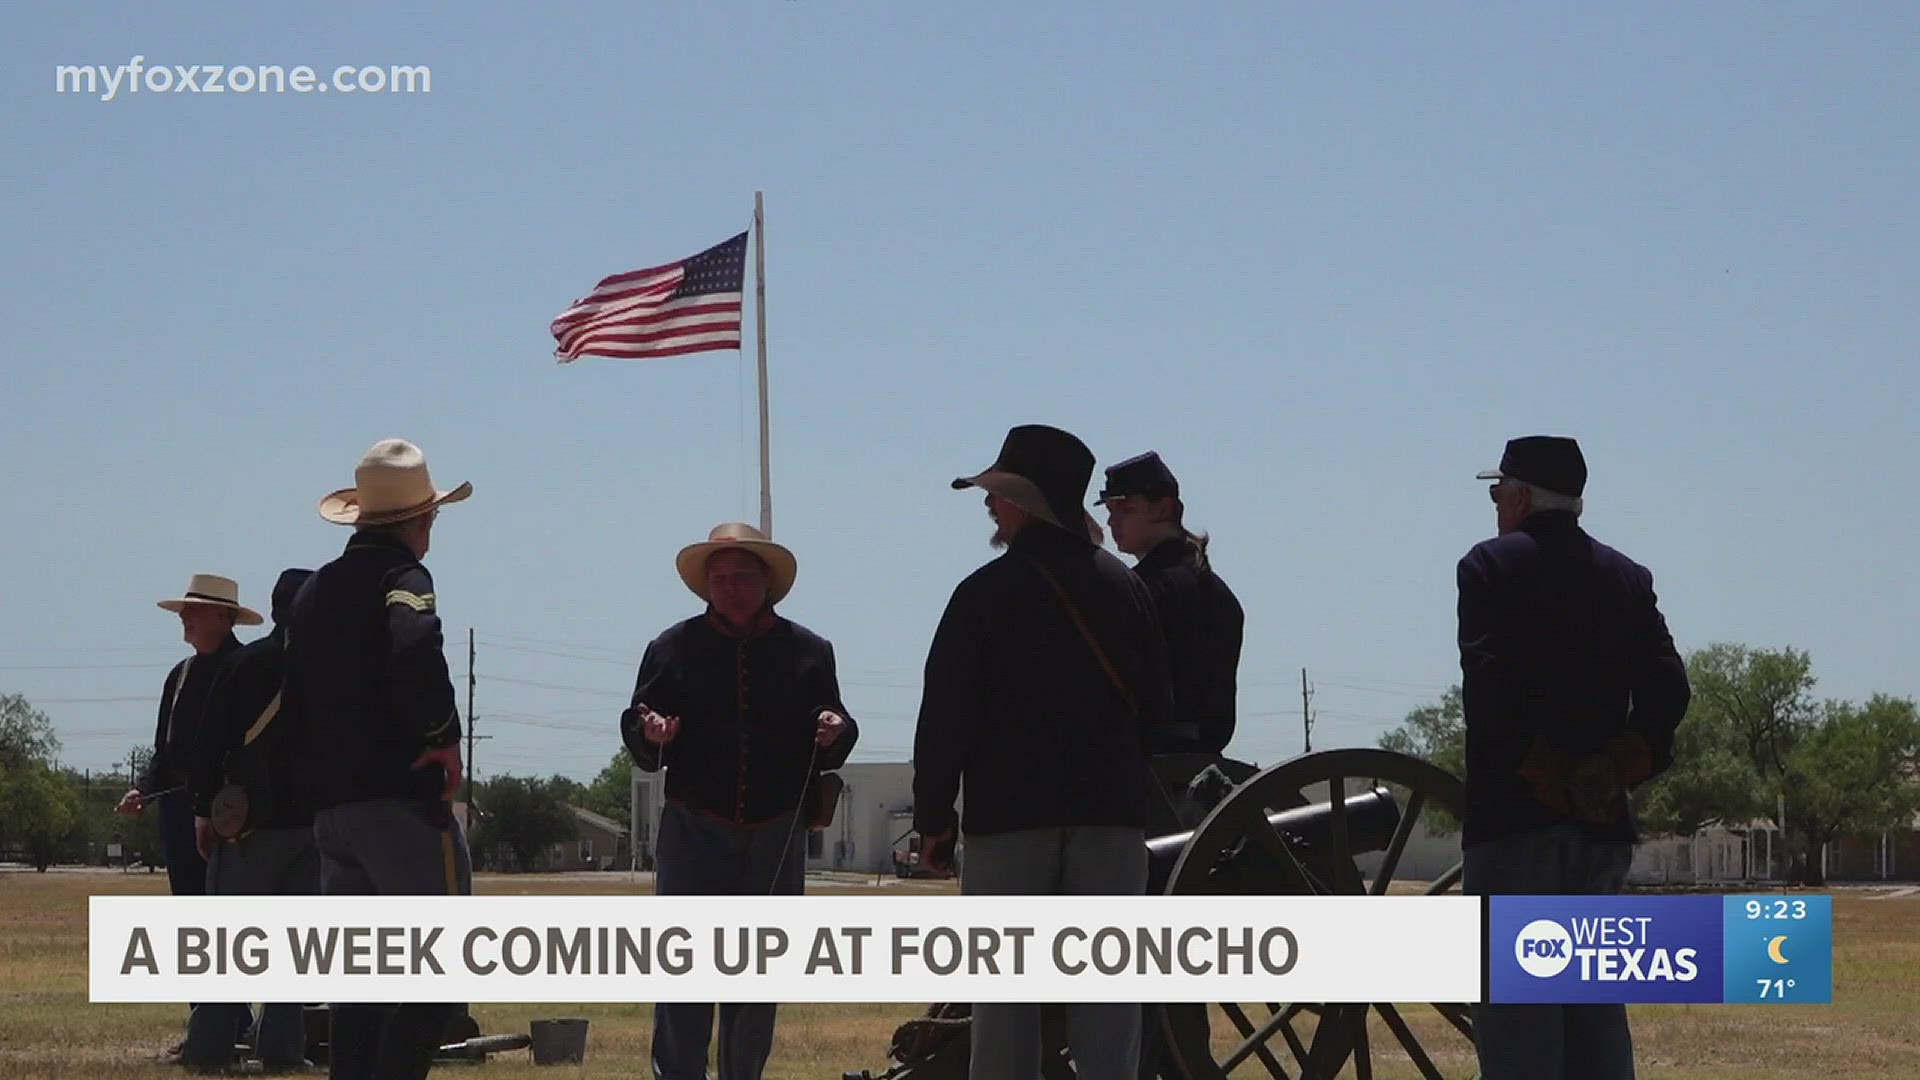 Fort Concho kicks off a big week next Thursday.